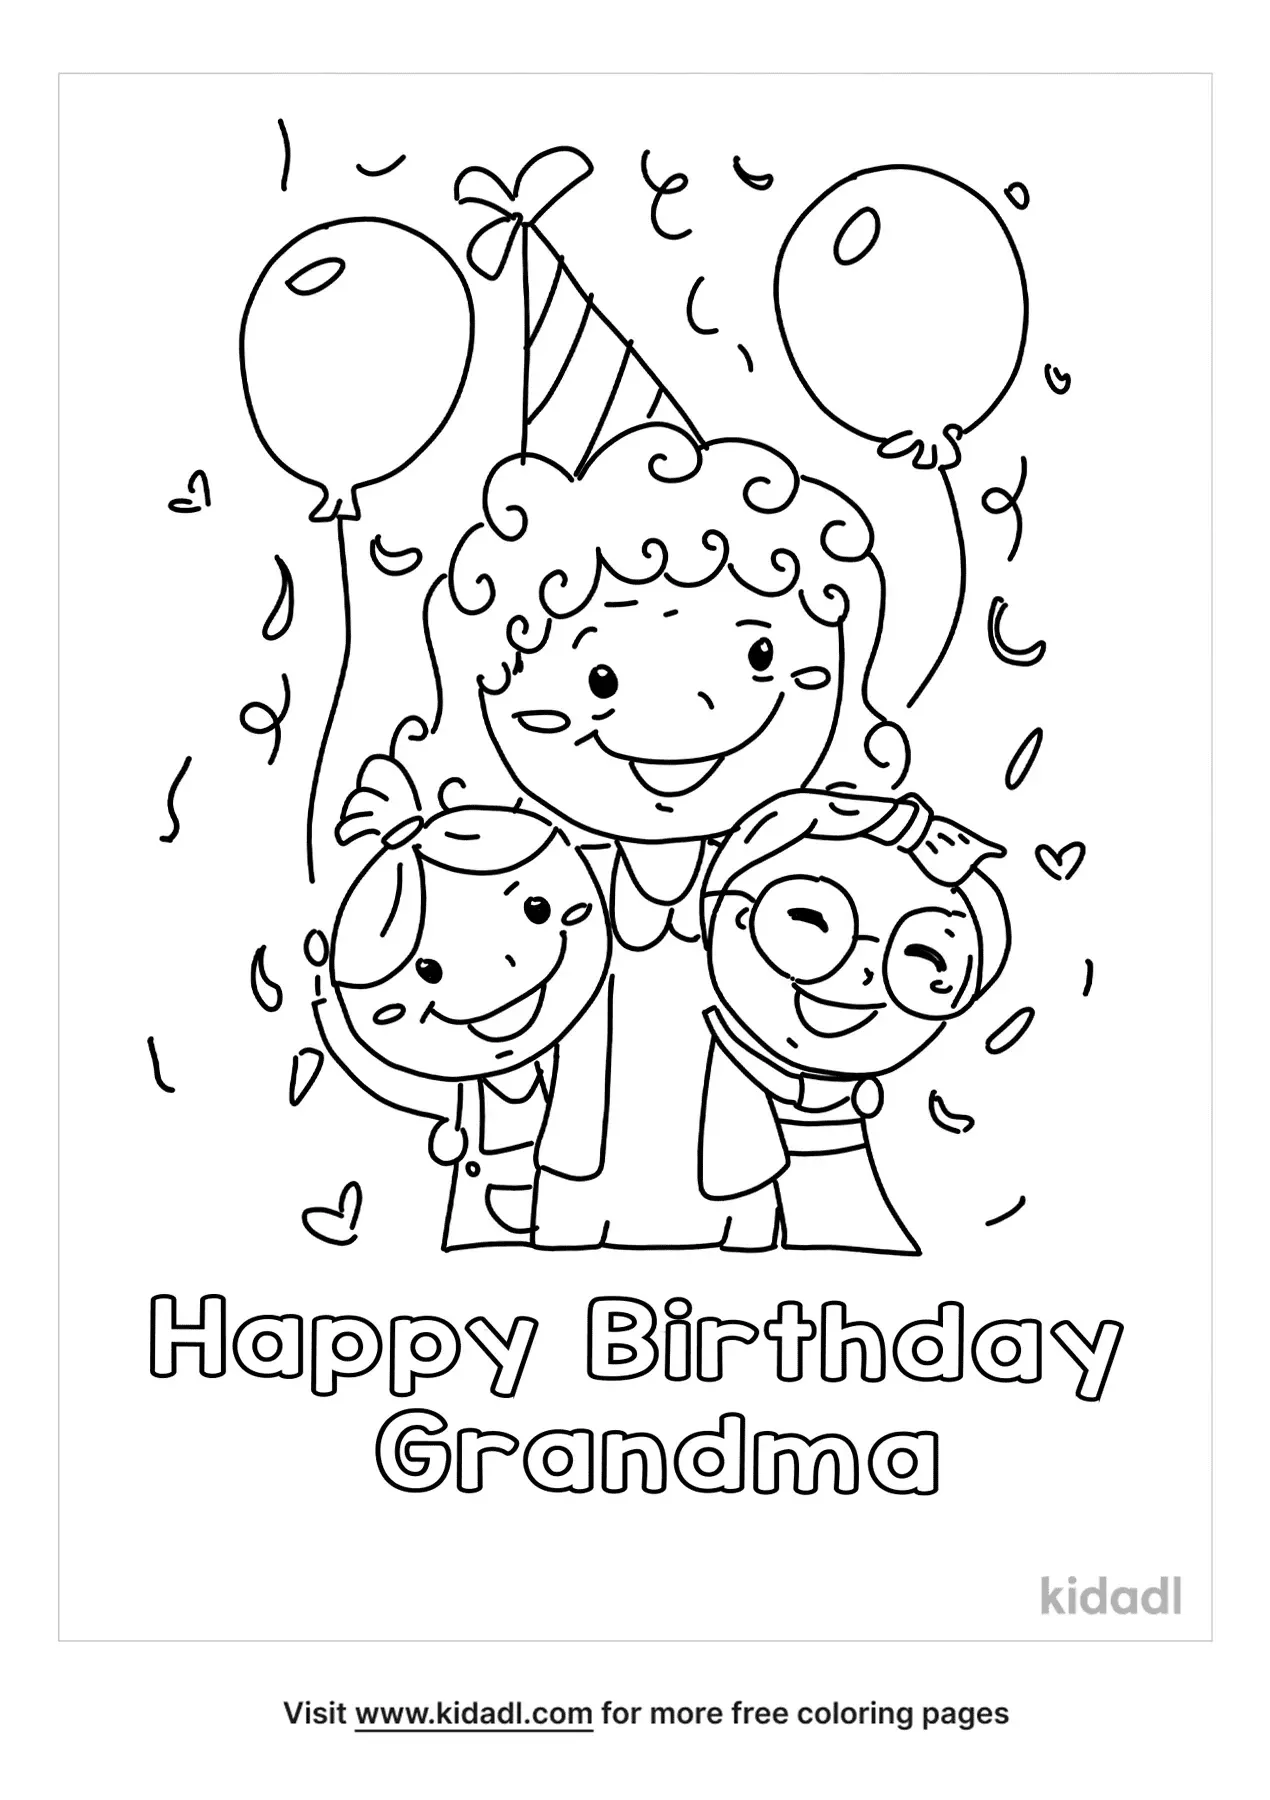 free-happy-birthday-grandma-coloring-page-coloring-page-printables